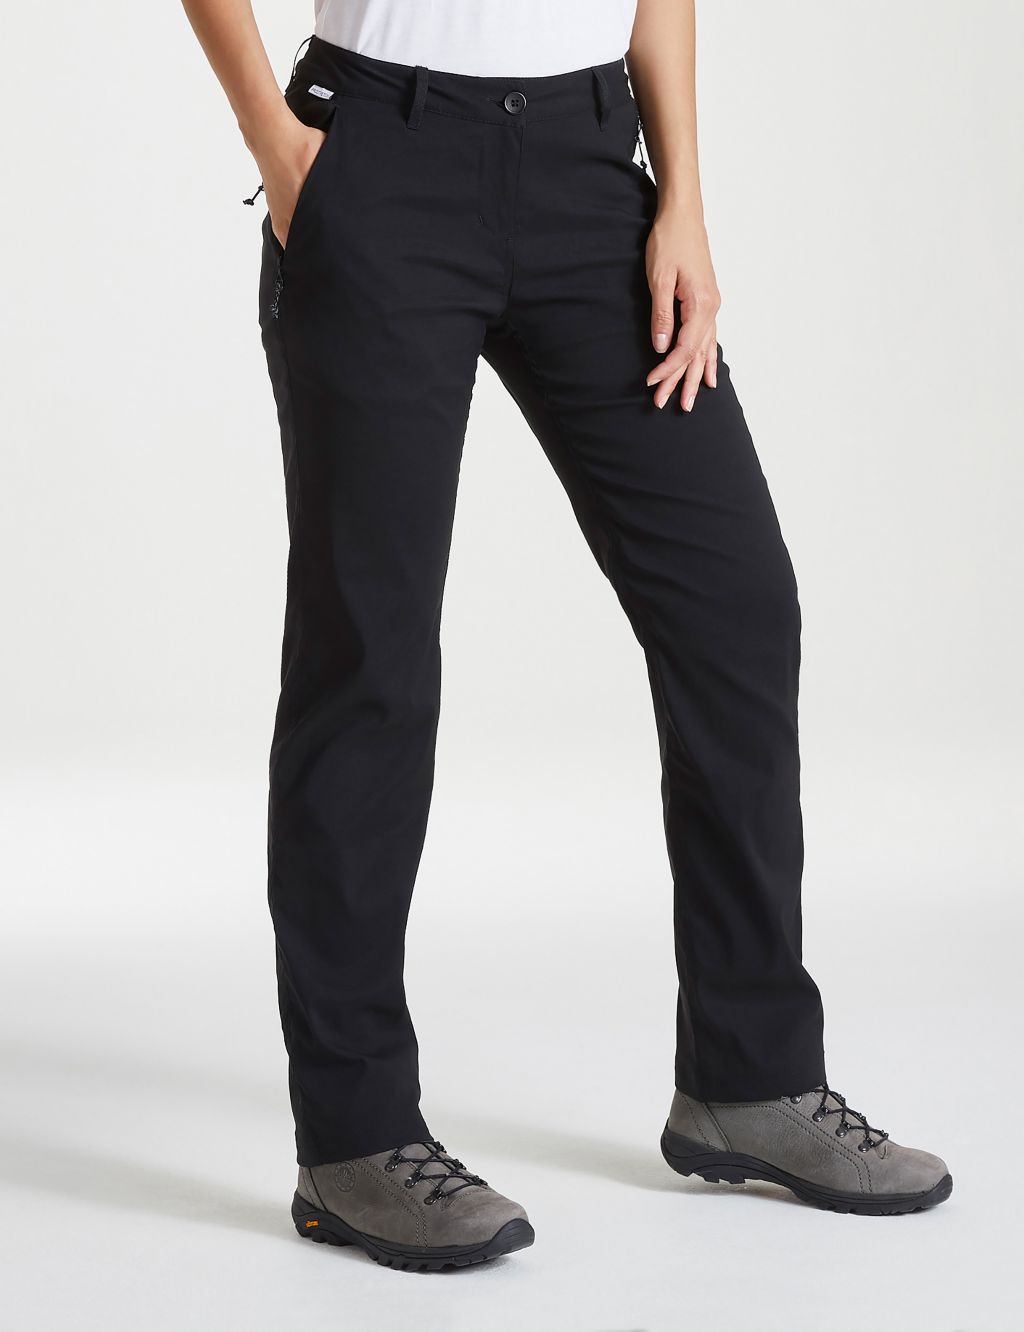 Kiwi Pro Lined Trousers image 1